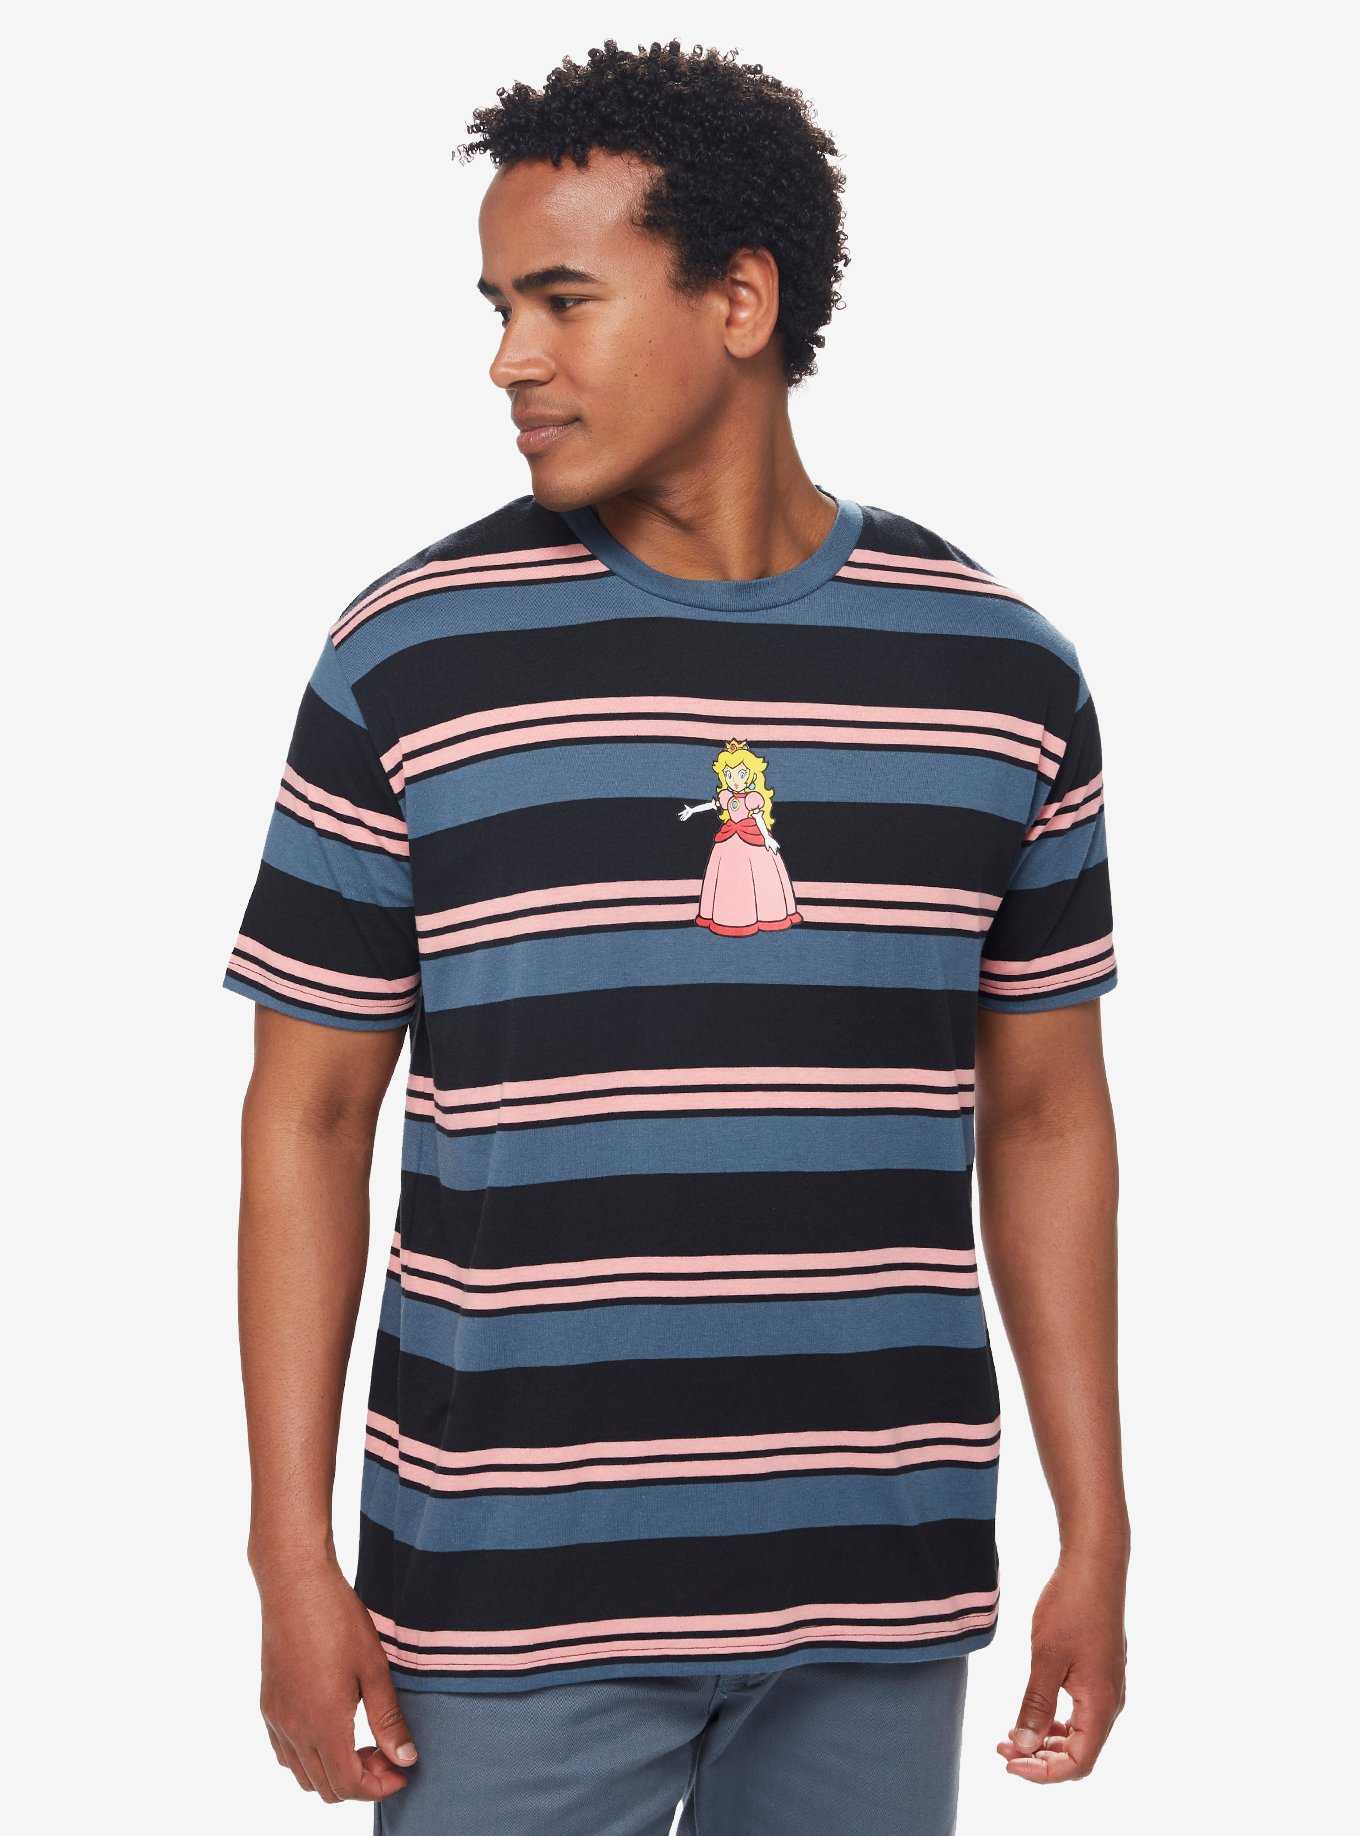 Nintendo Super Mario Bros. Princess Peach Striped T-Shirt - BoxLunch Exclusive, , hi-res